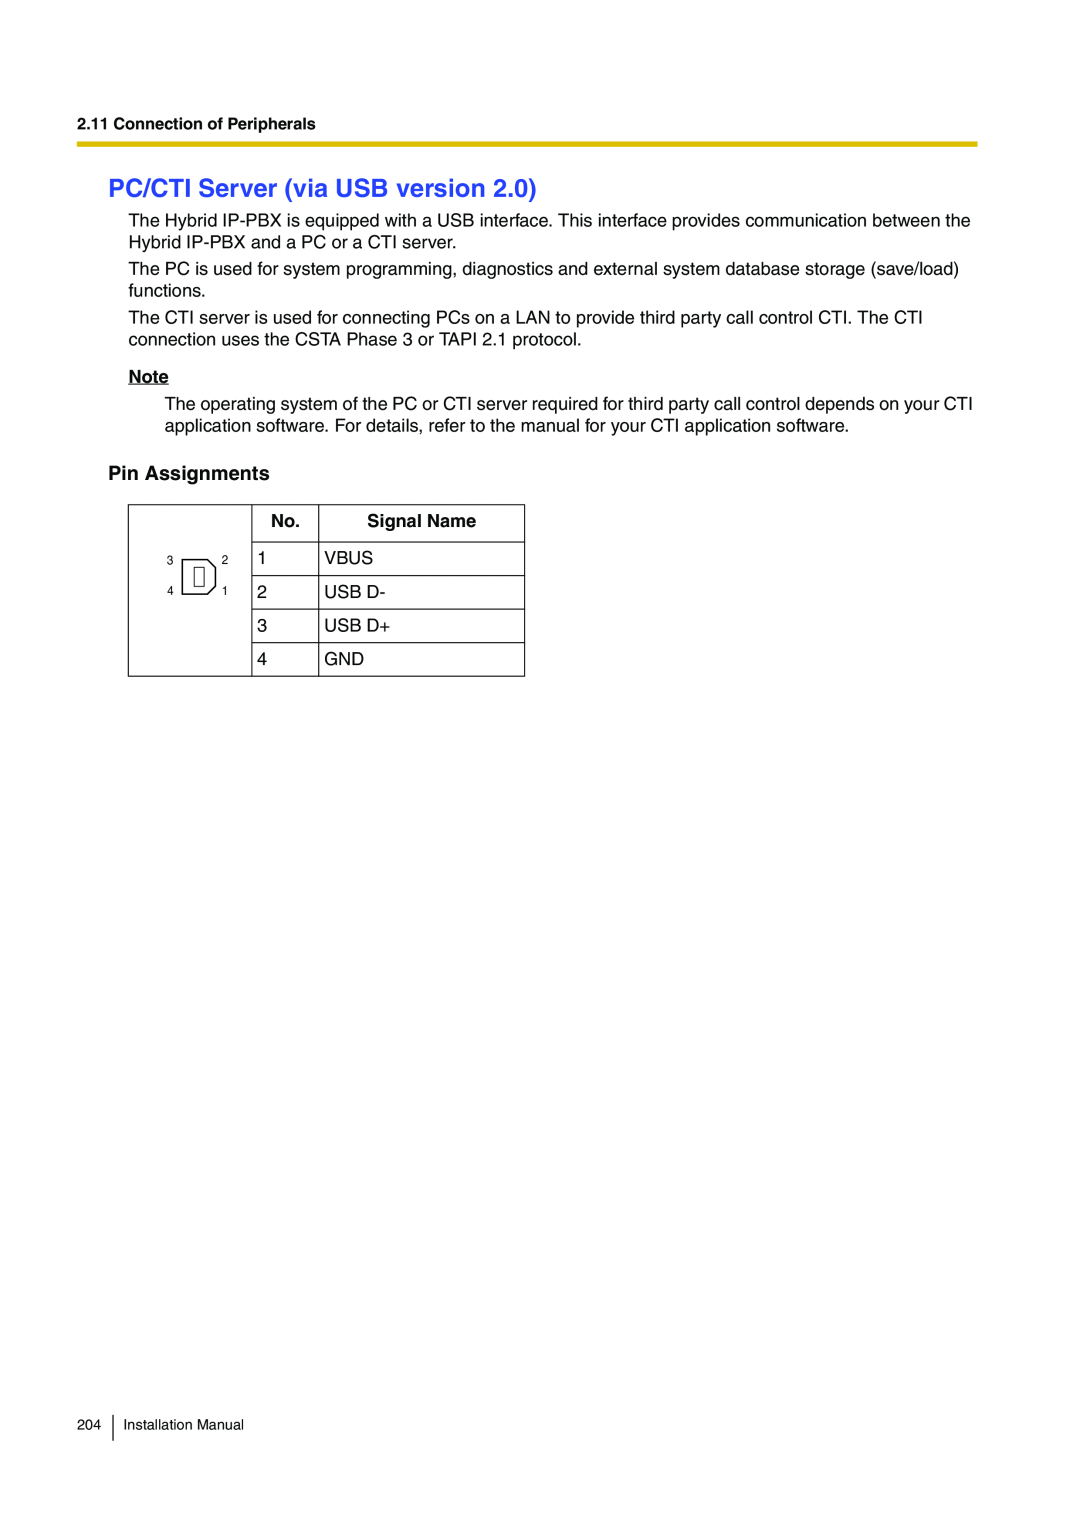 Panasonic KX-TDA100 installation manual PC/CTI Server via USB version, Pin Assignments, Installation Manual 